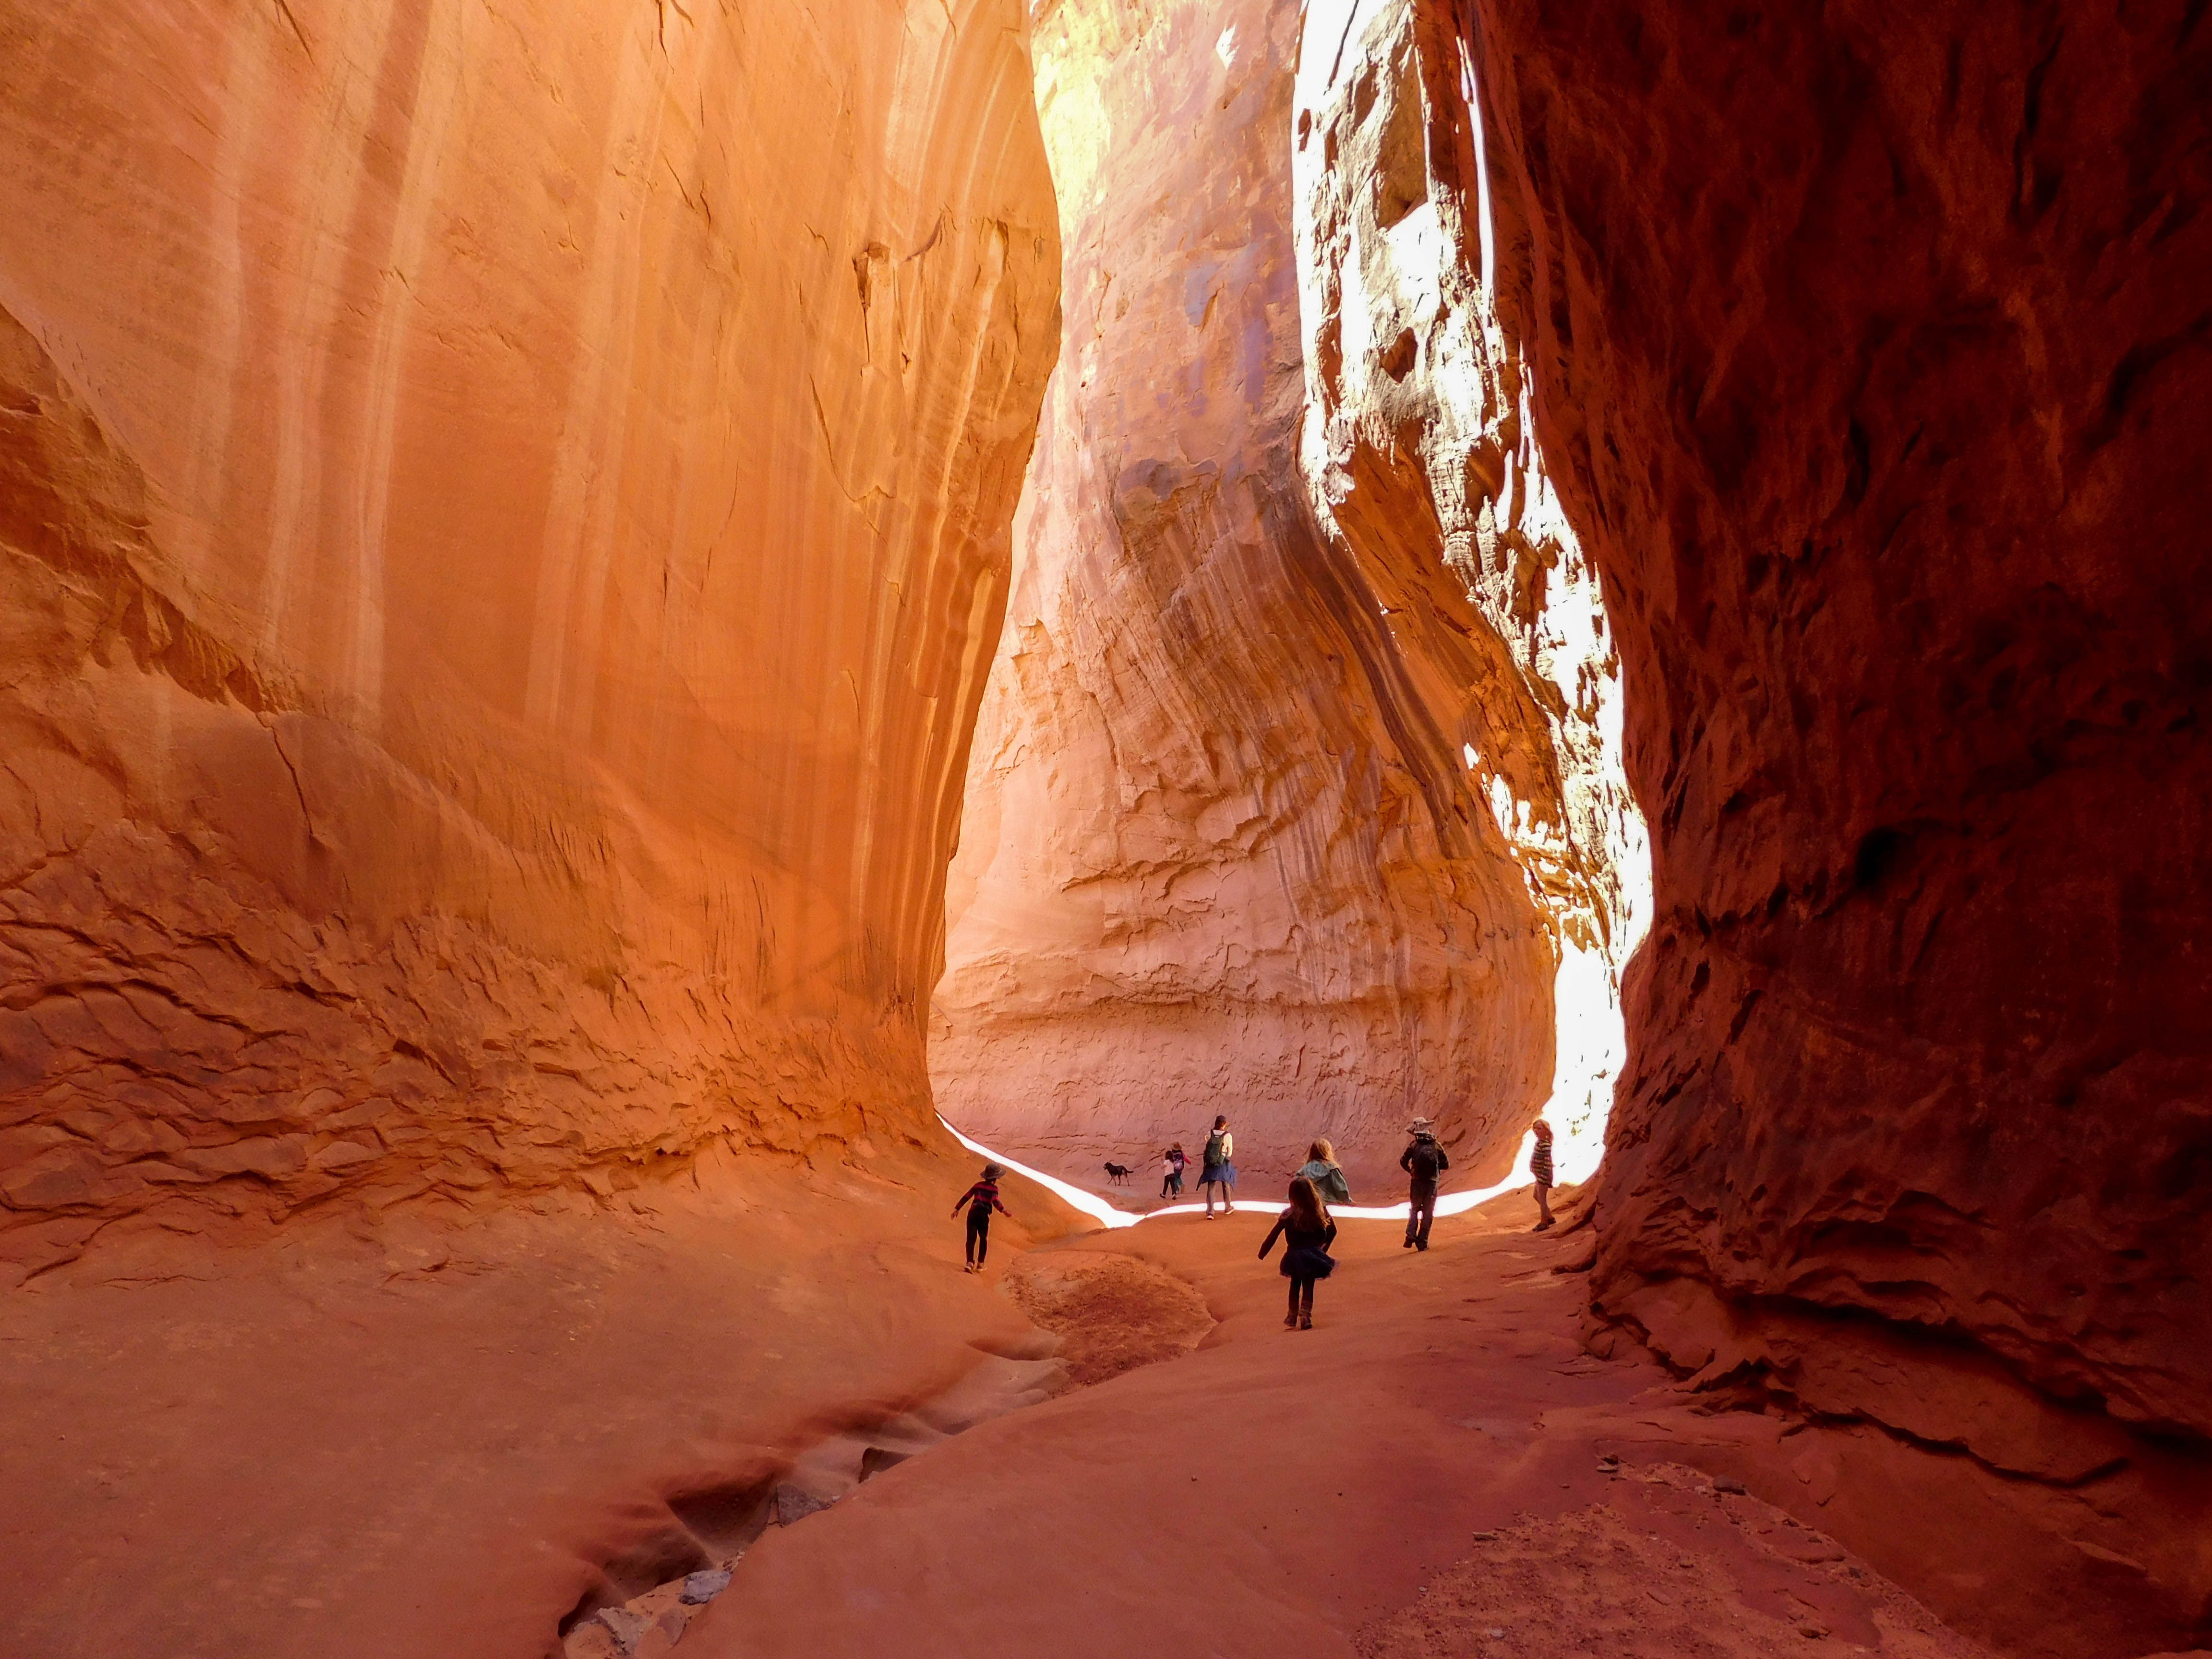 Children run through a red rock canyon. 